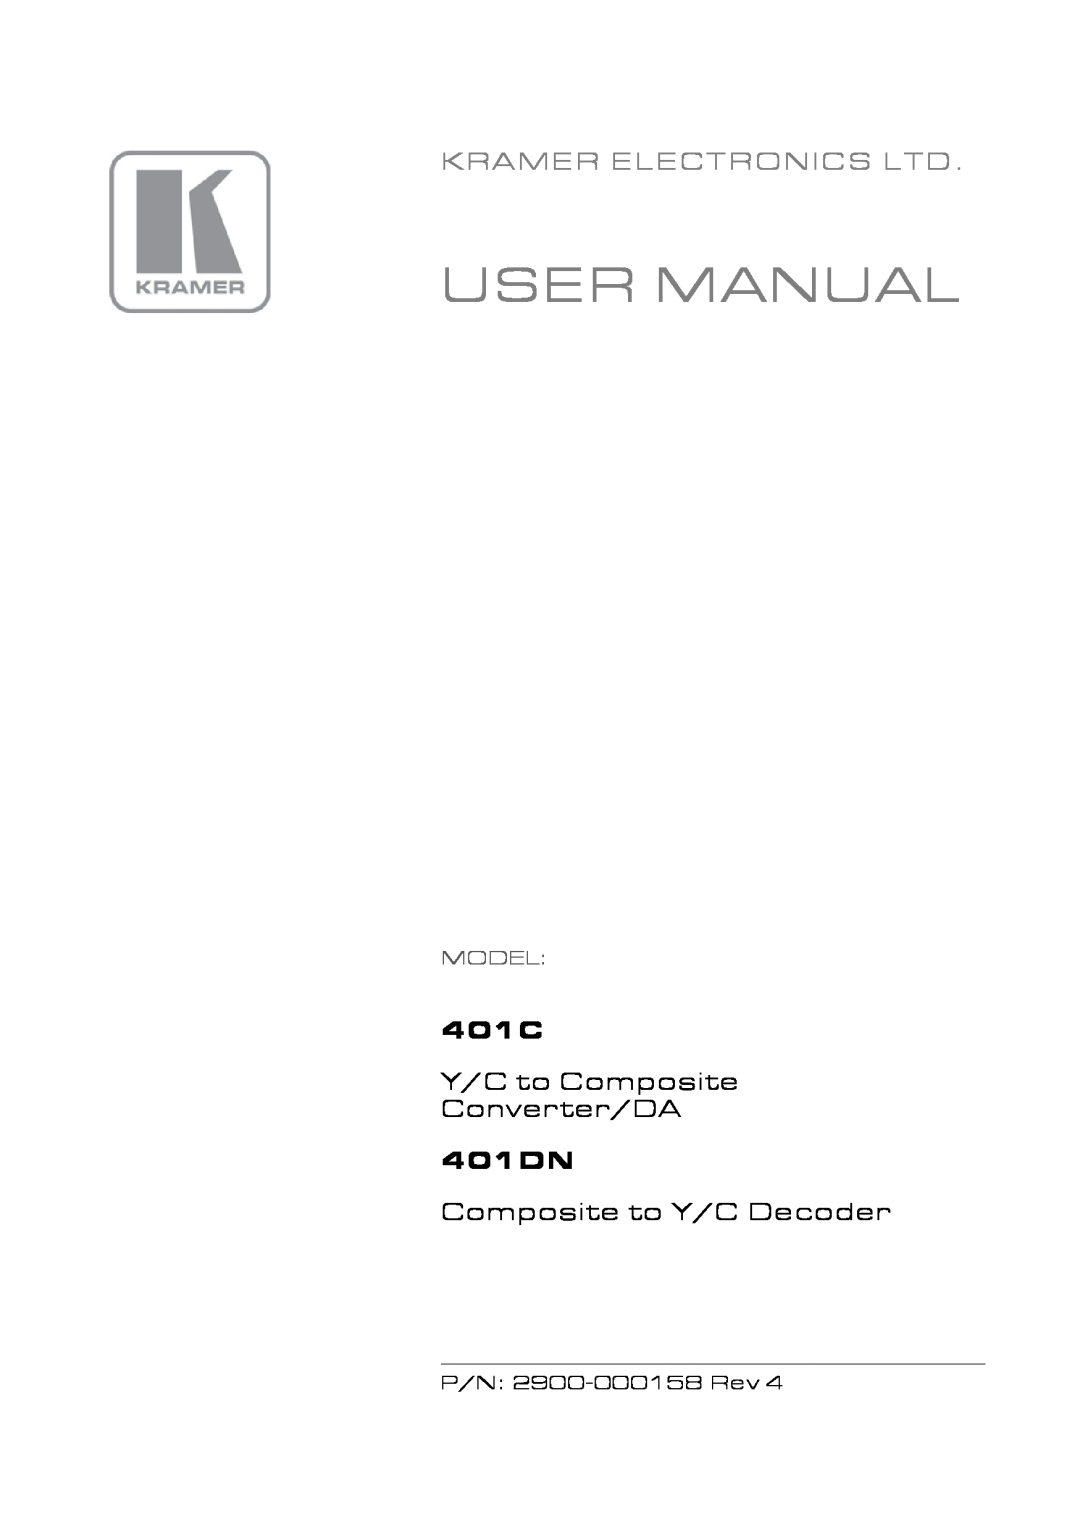 Kramer Electronics 401C user manual Y/C to Composite Converter/DA, 401DN, Composite to Y/C Decoder, Model 